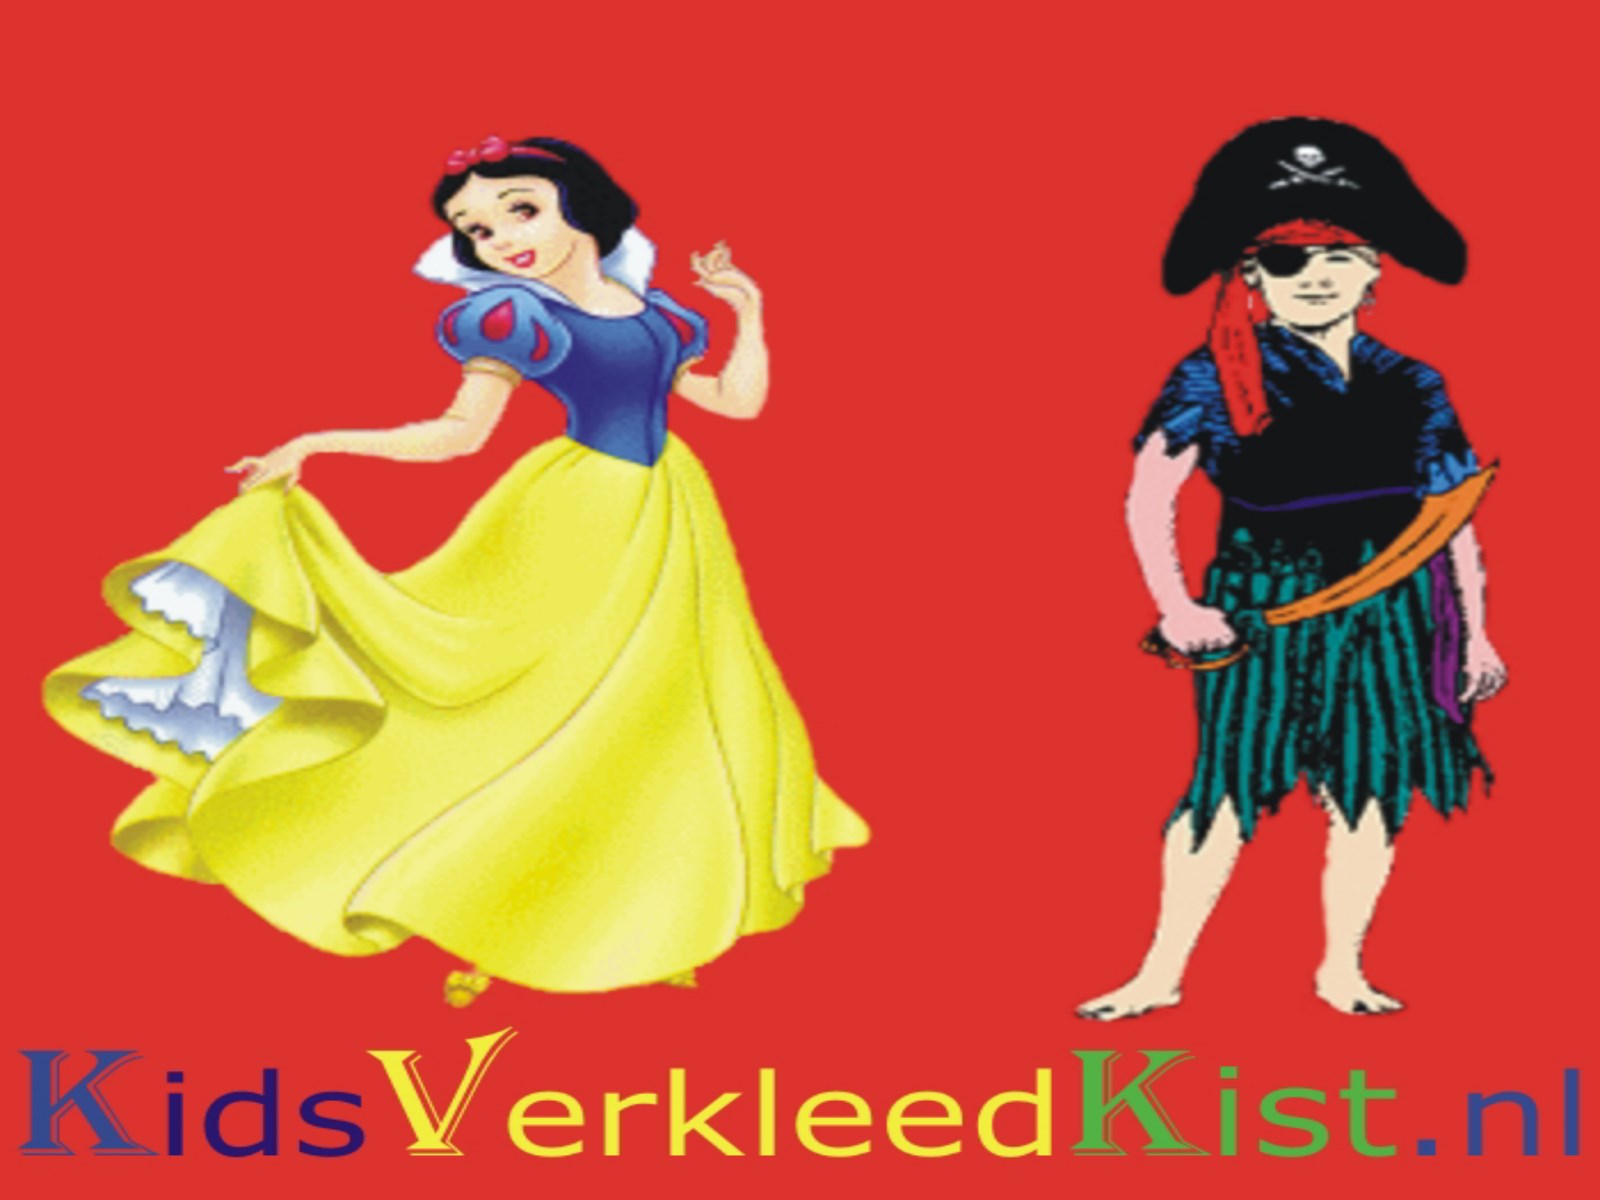 Kidsverkleedkist.nl